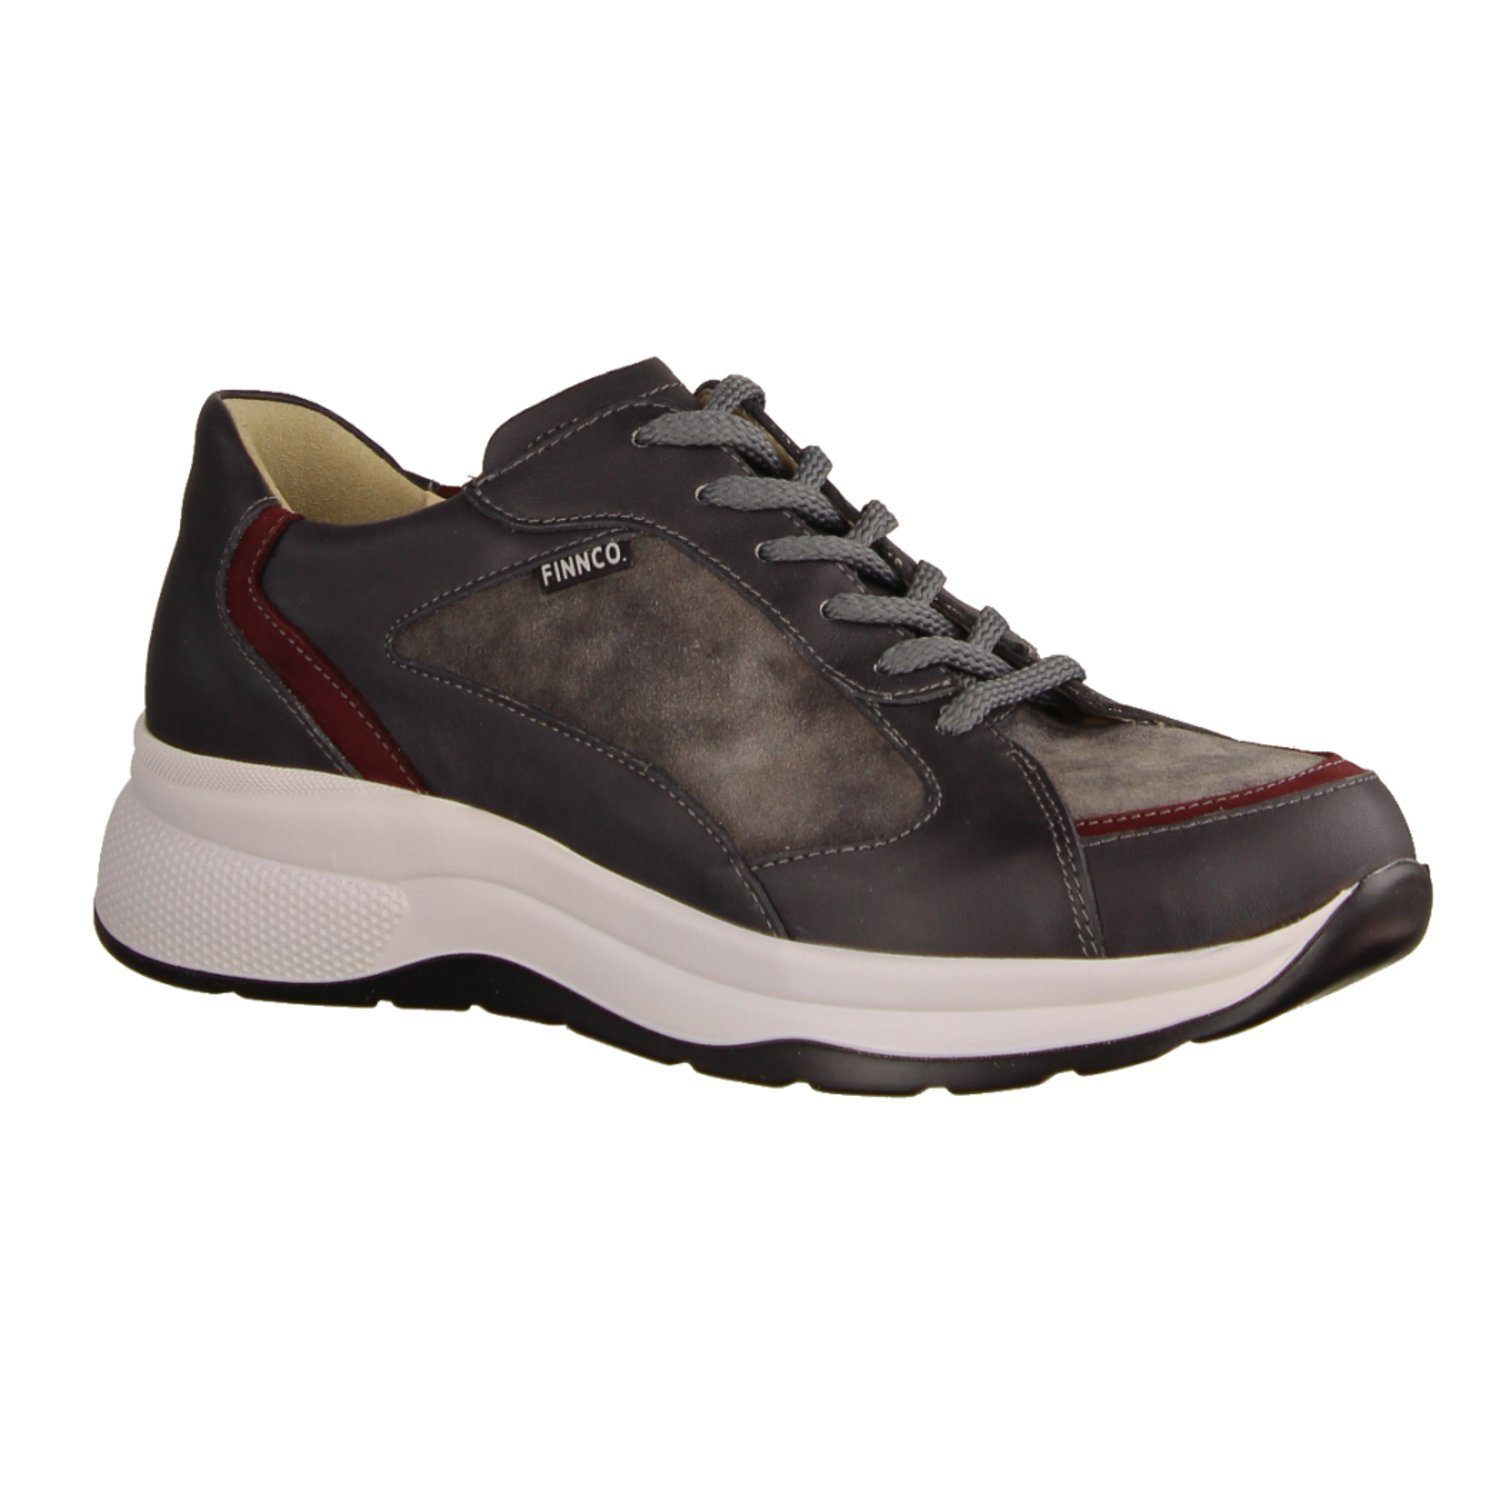 Finn Comfort Sneaker online kaufen | OTTO